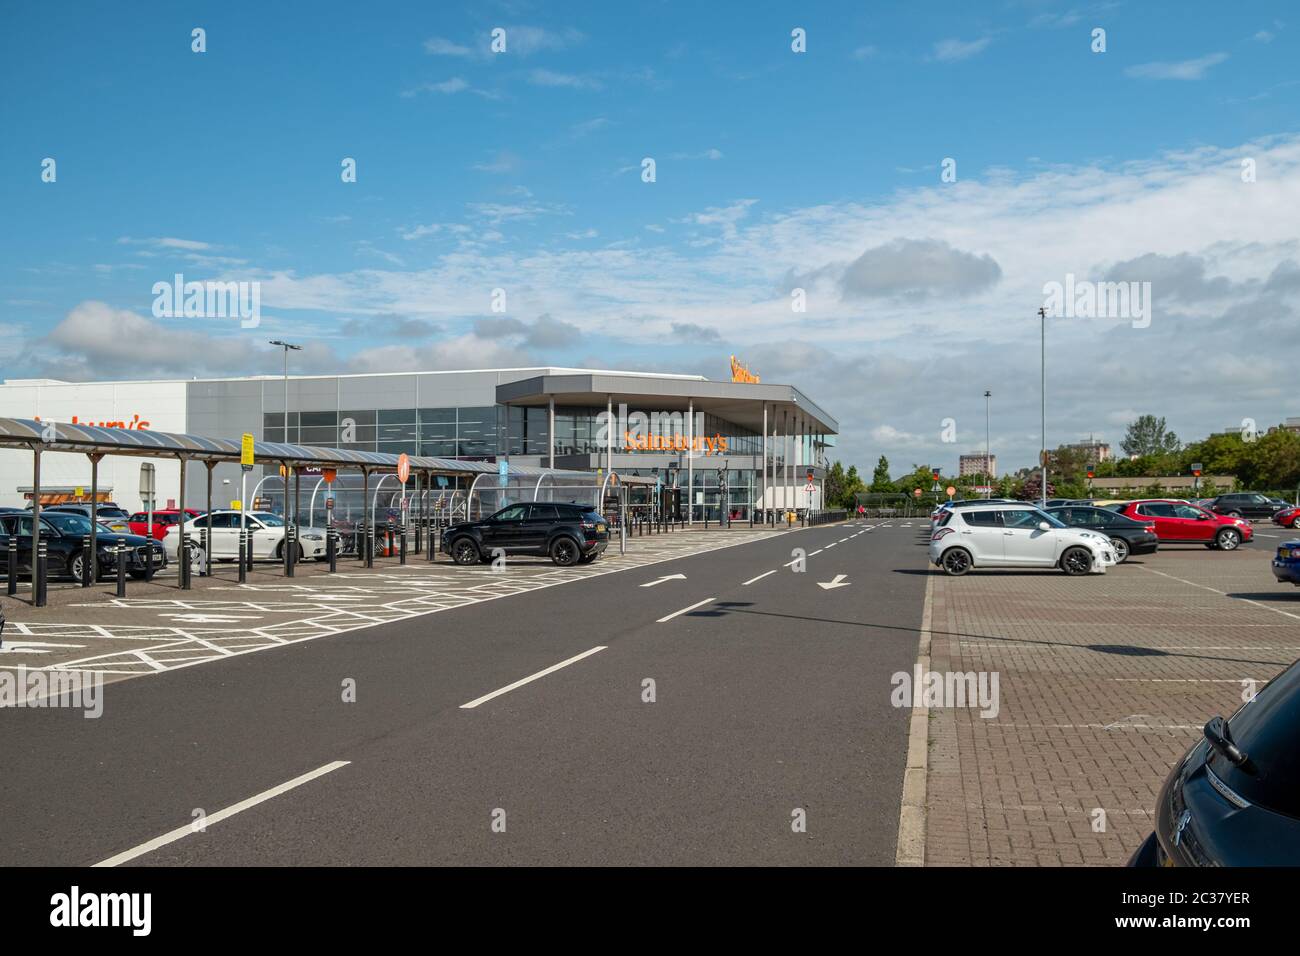 Irvine, Scotland, UK - June 15, 2020: Sainsbury’s Branded supermarkets still quiet with half empty carparks in Irvine during covid-19 lockdown. Stock Photo